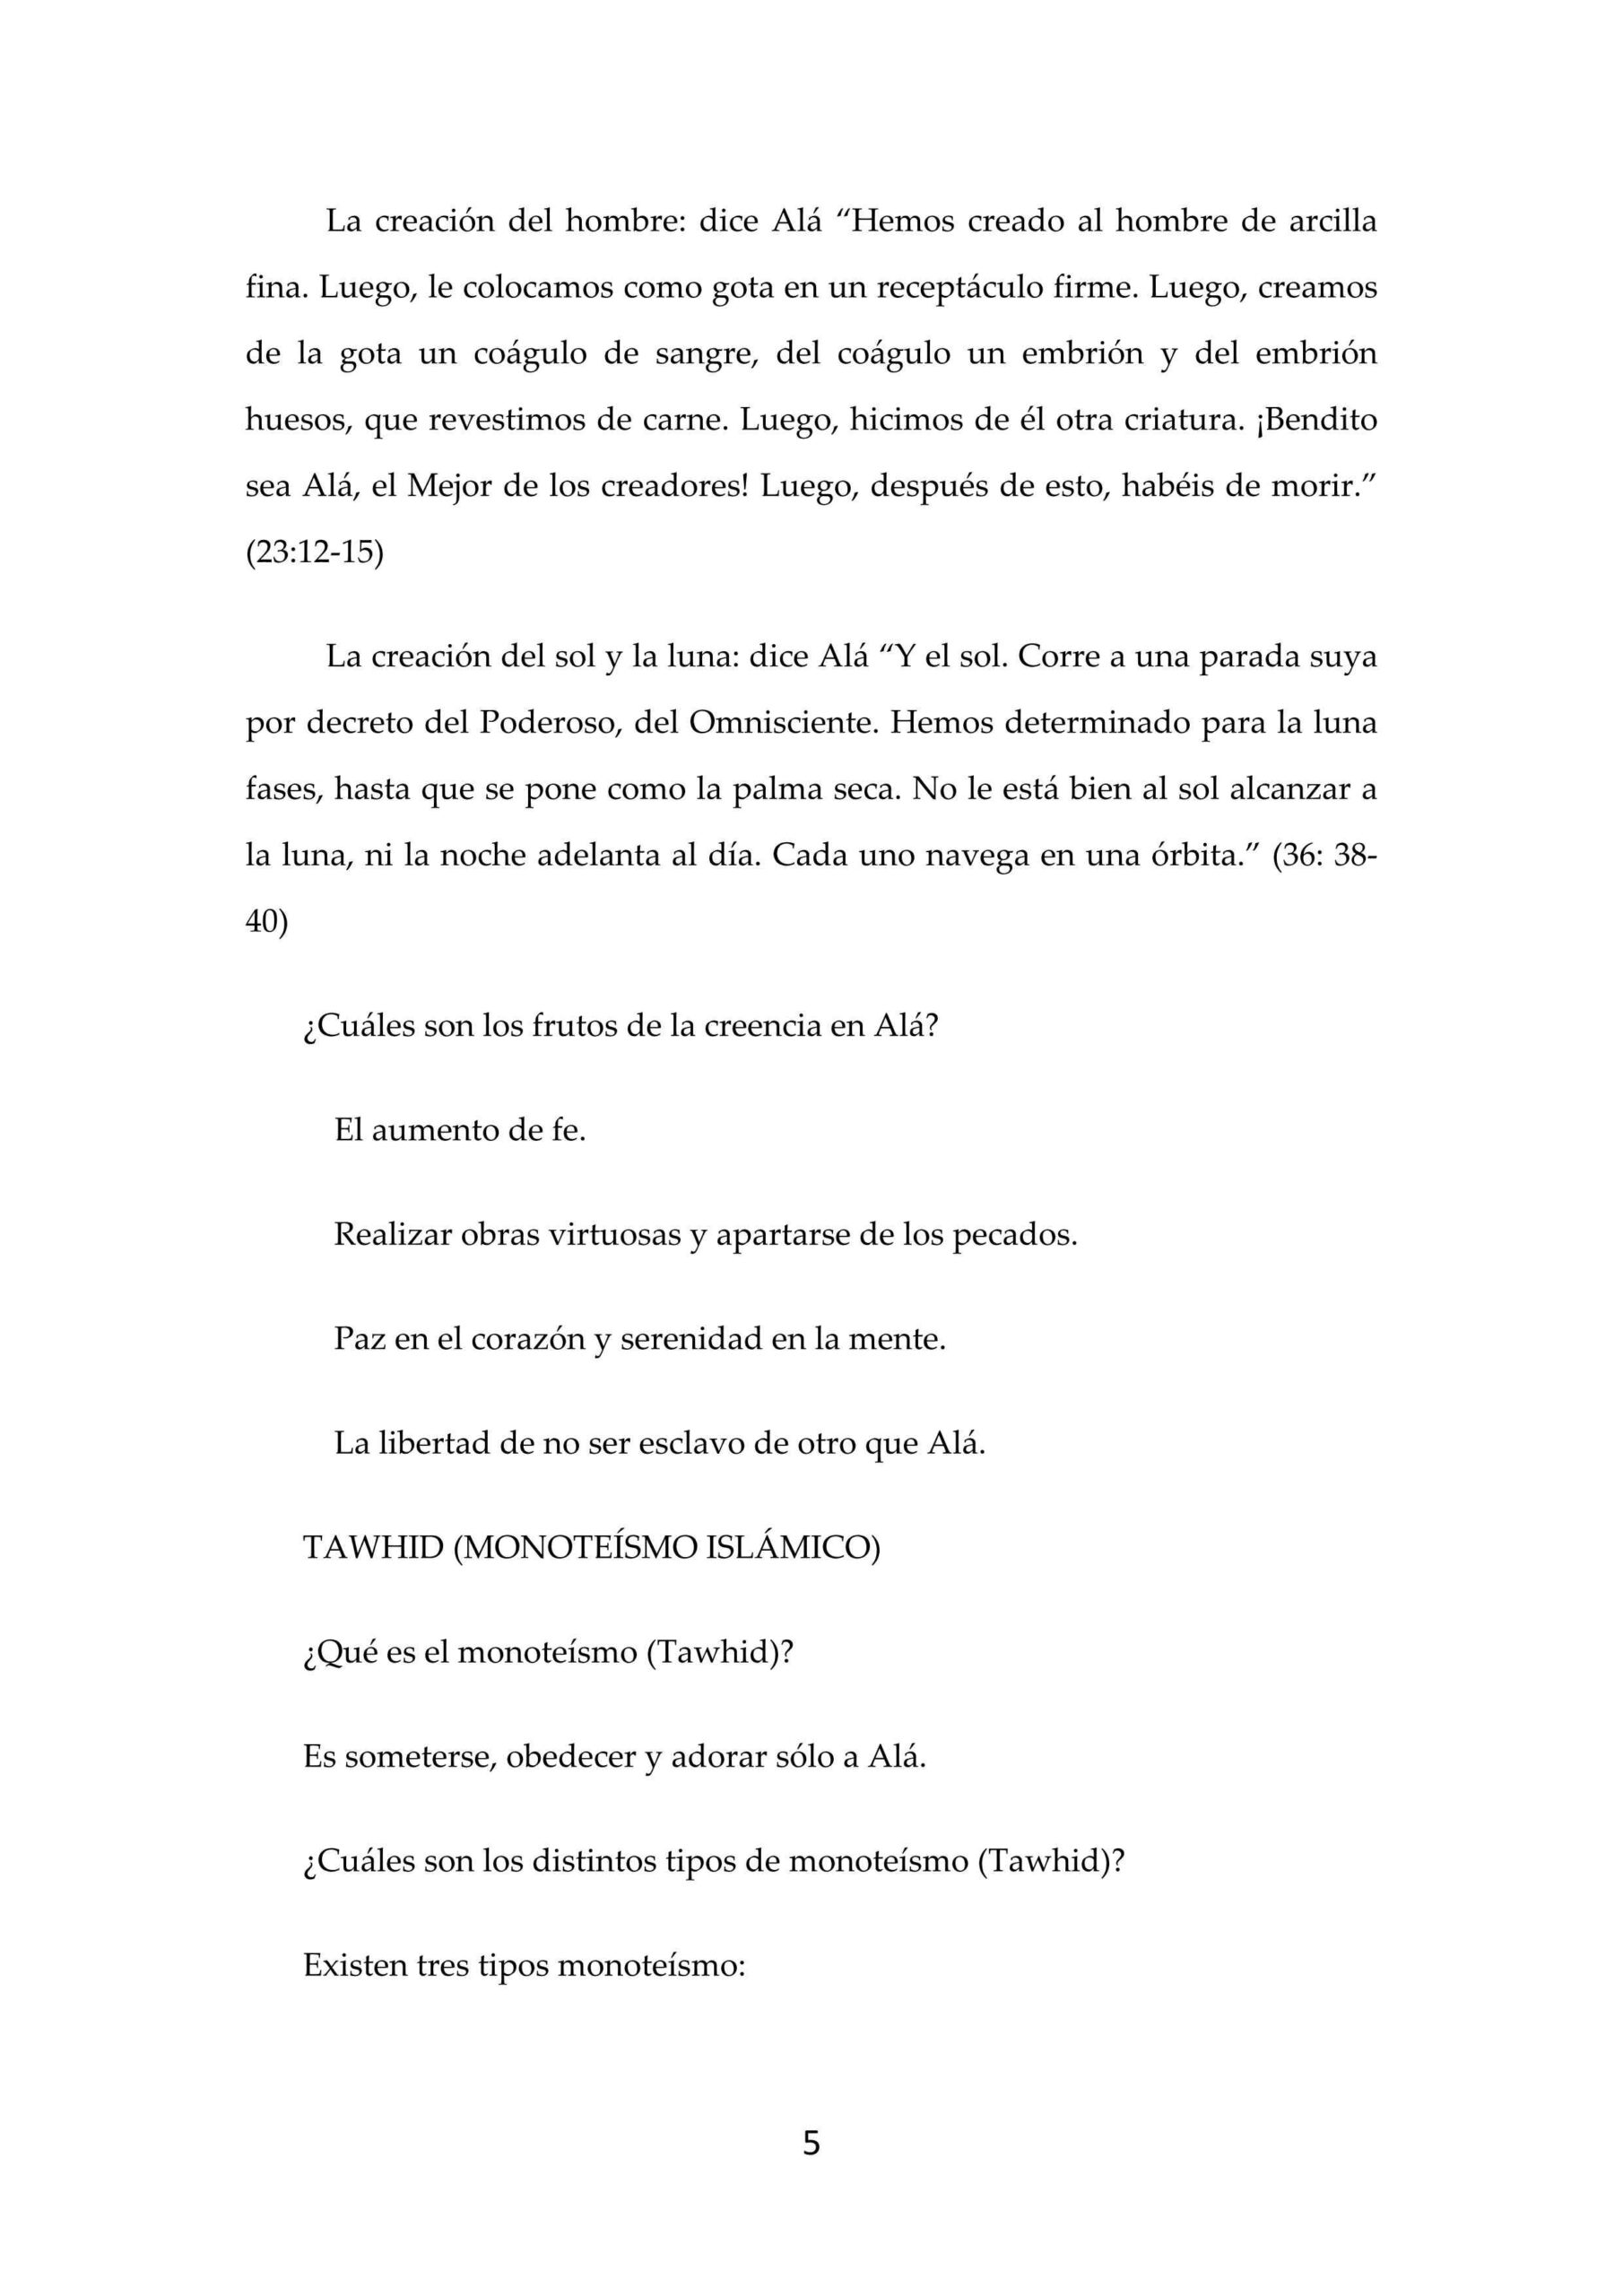 إسباني - أركان الإيمان - Los Pilares de la fe.pdf, 10-Sayfa 